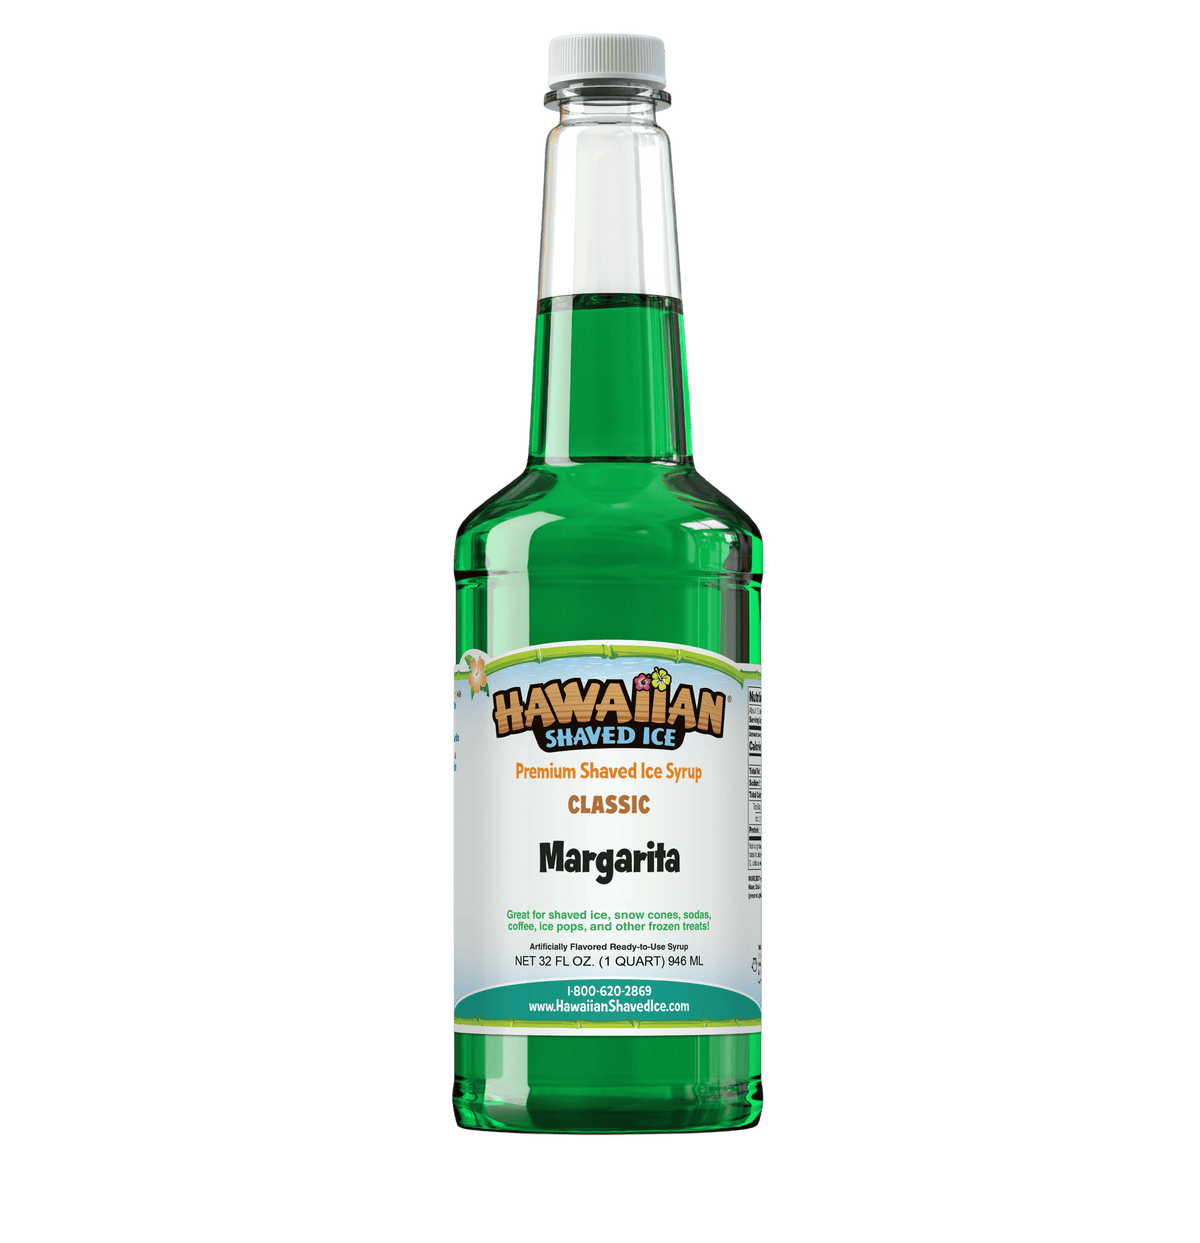 Green, Quart bottle of Margarita flavored syrup